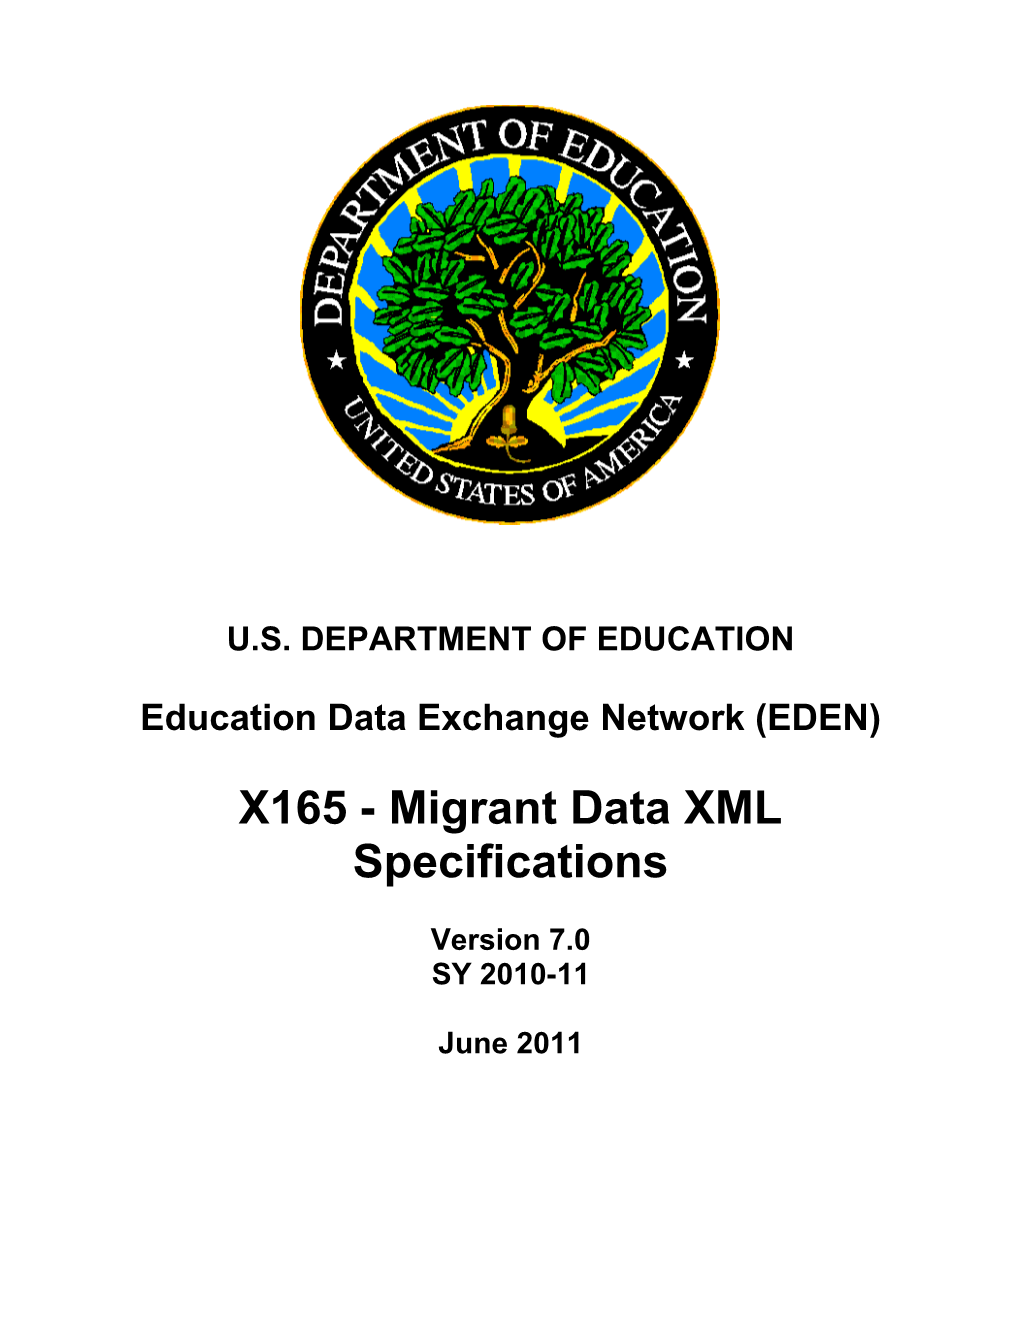 Migrant Data XML Specifications